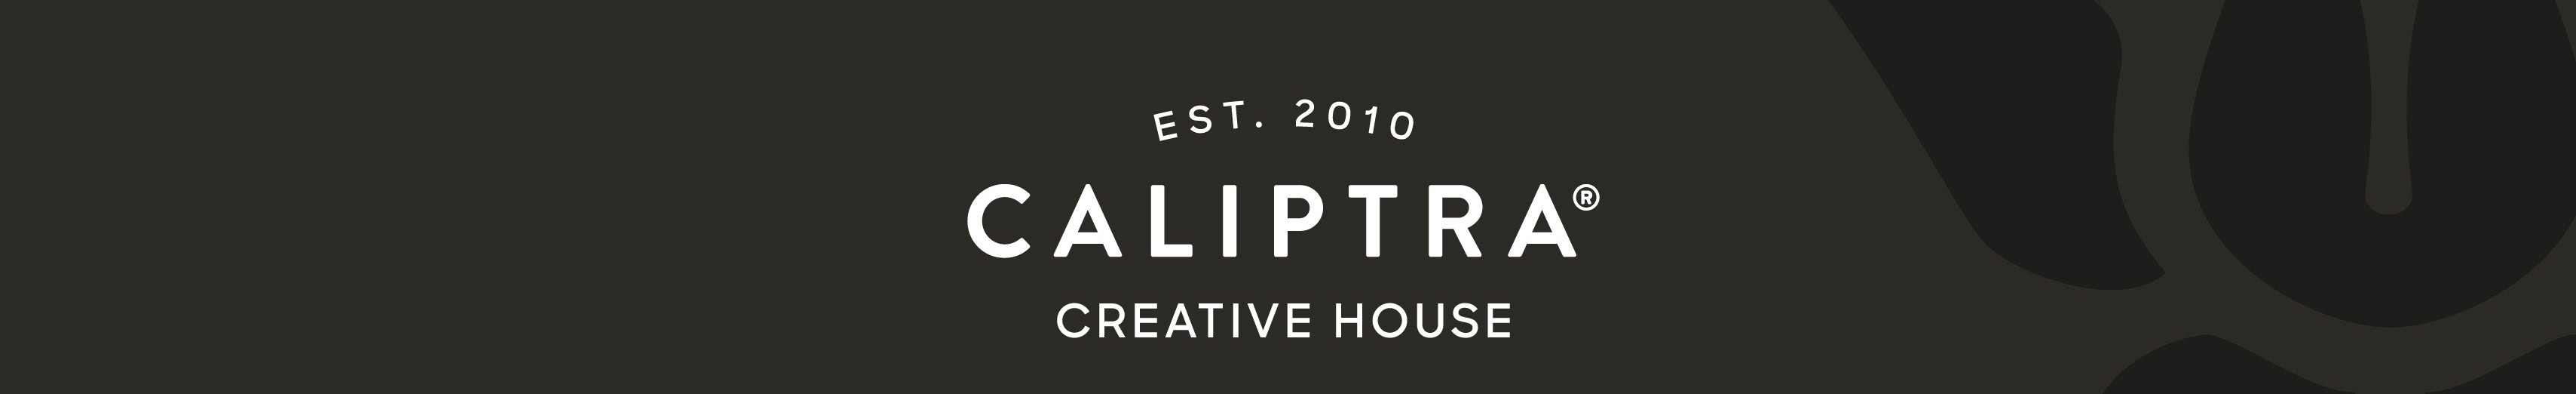 Caliptra Creative House's profile banner